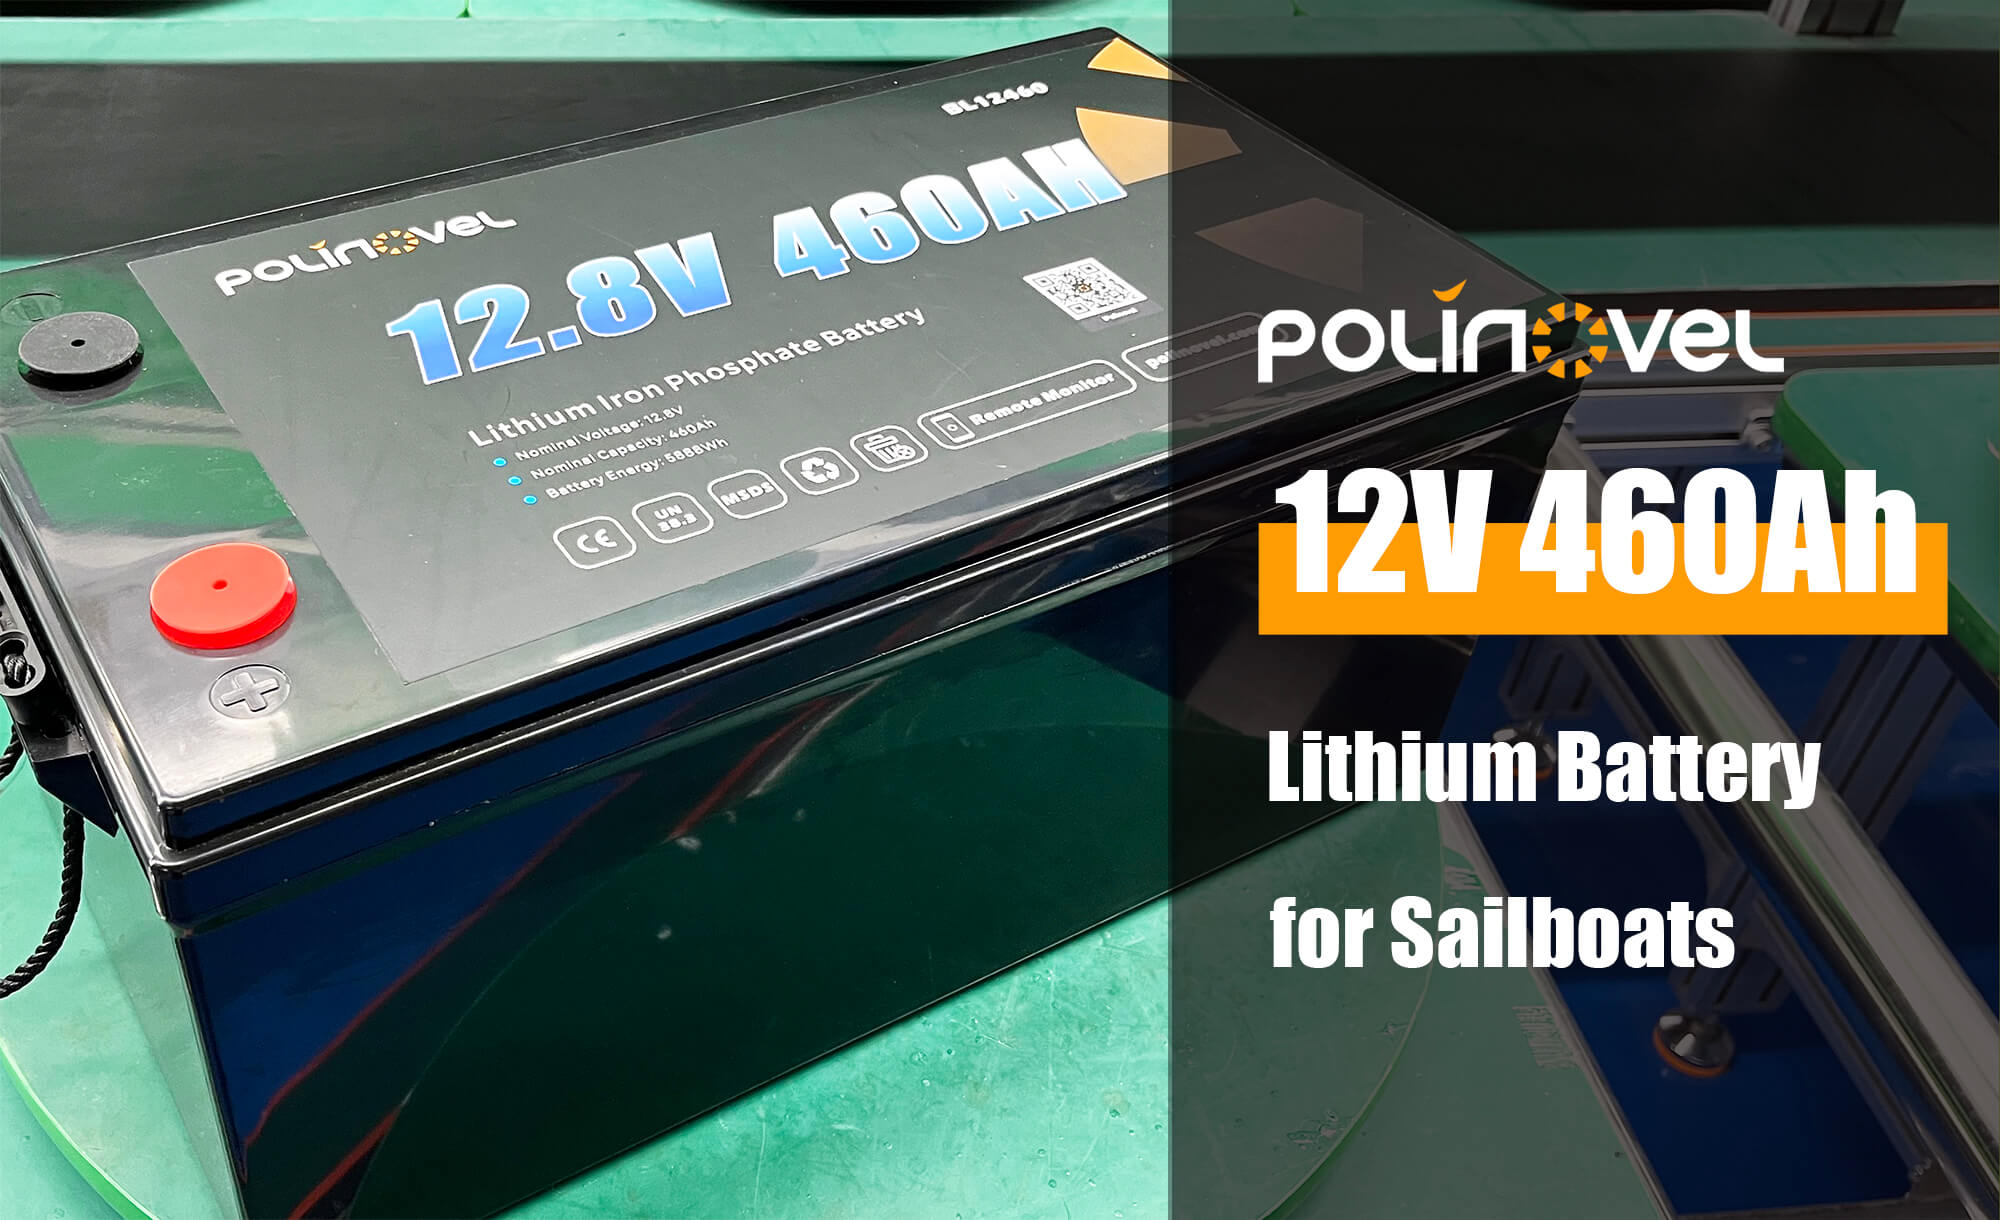 Polinovel 12V 460Ah Lithium Battery for Sailboats